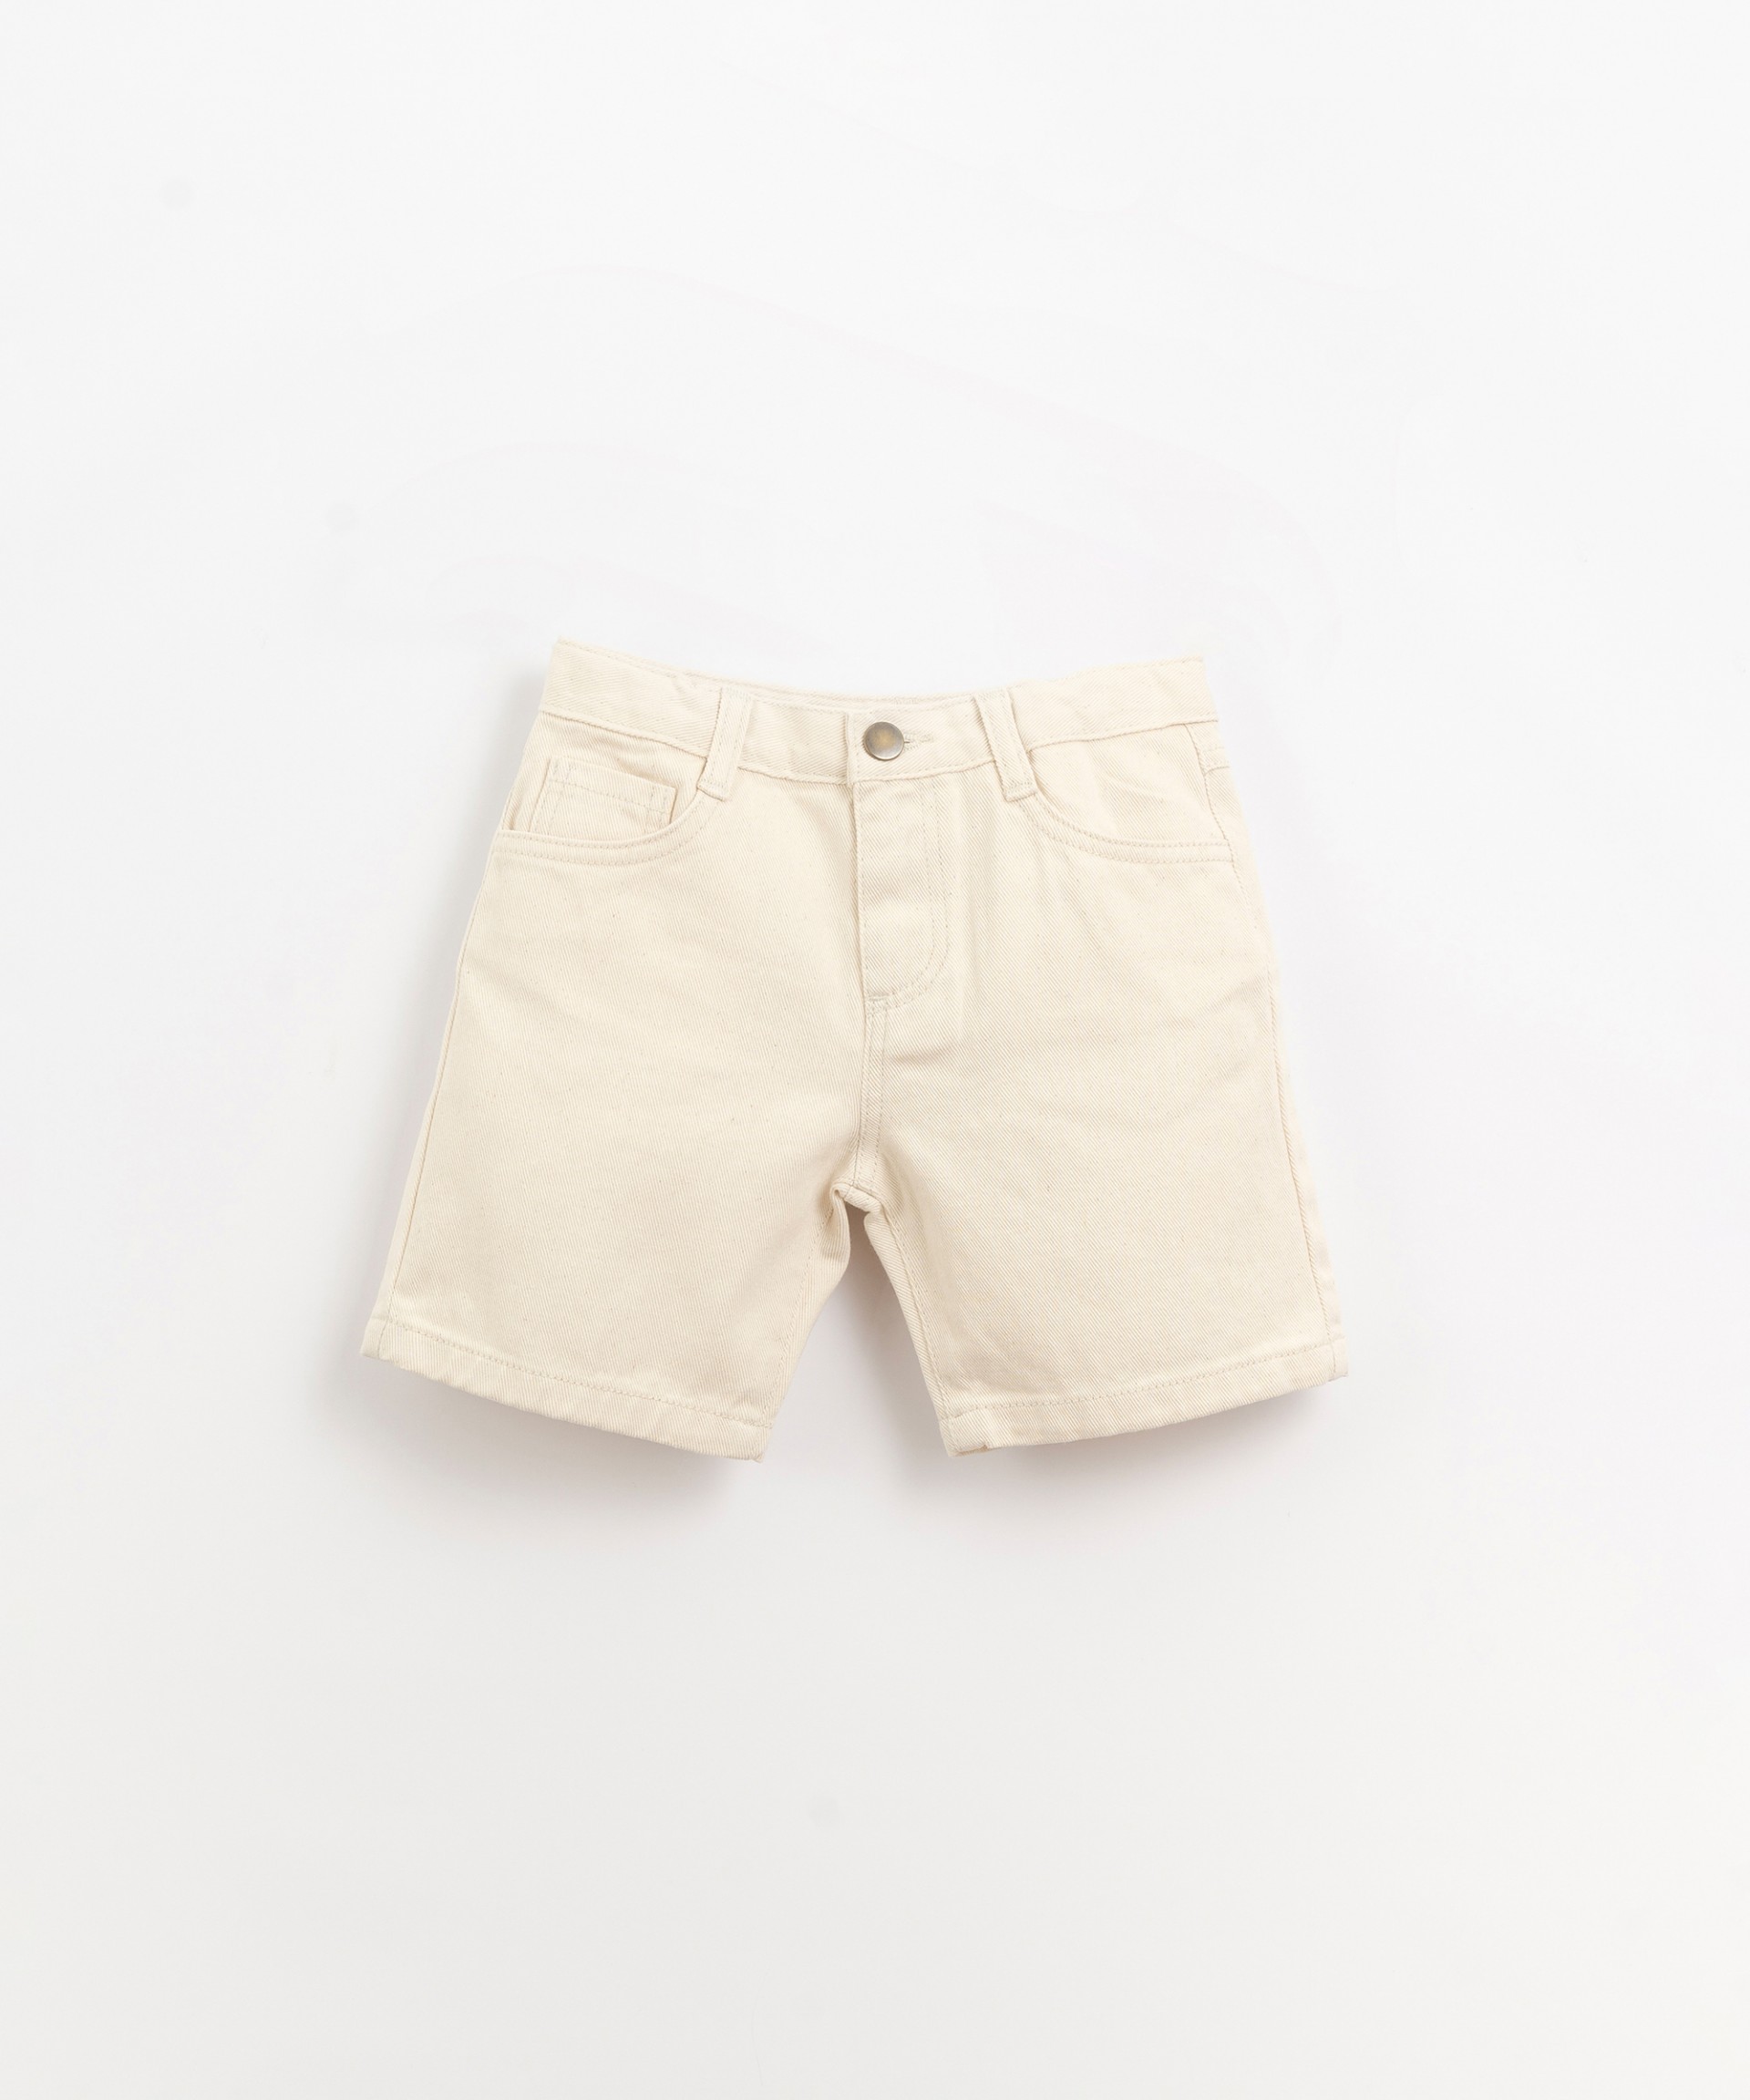 Naturally dyed serge shorts | Organic Care